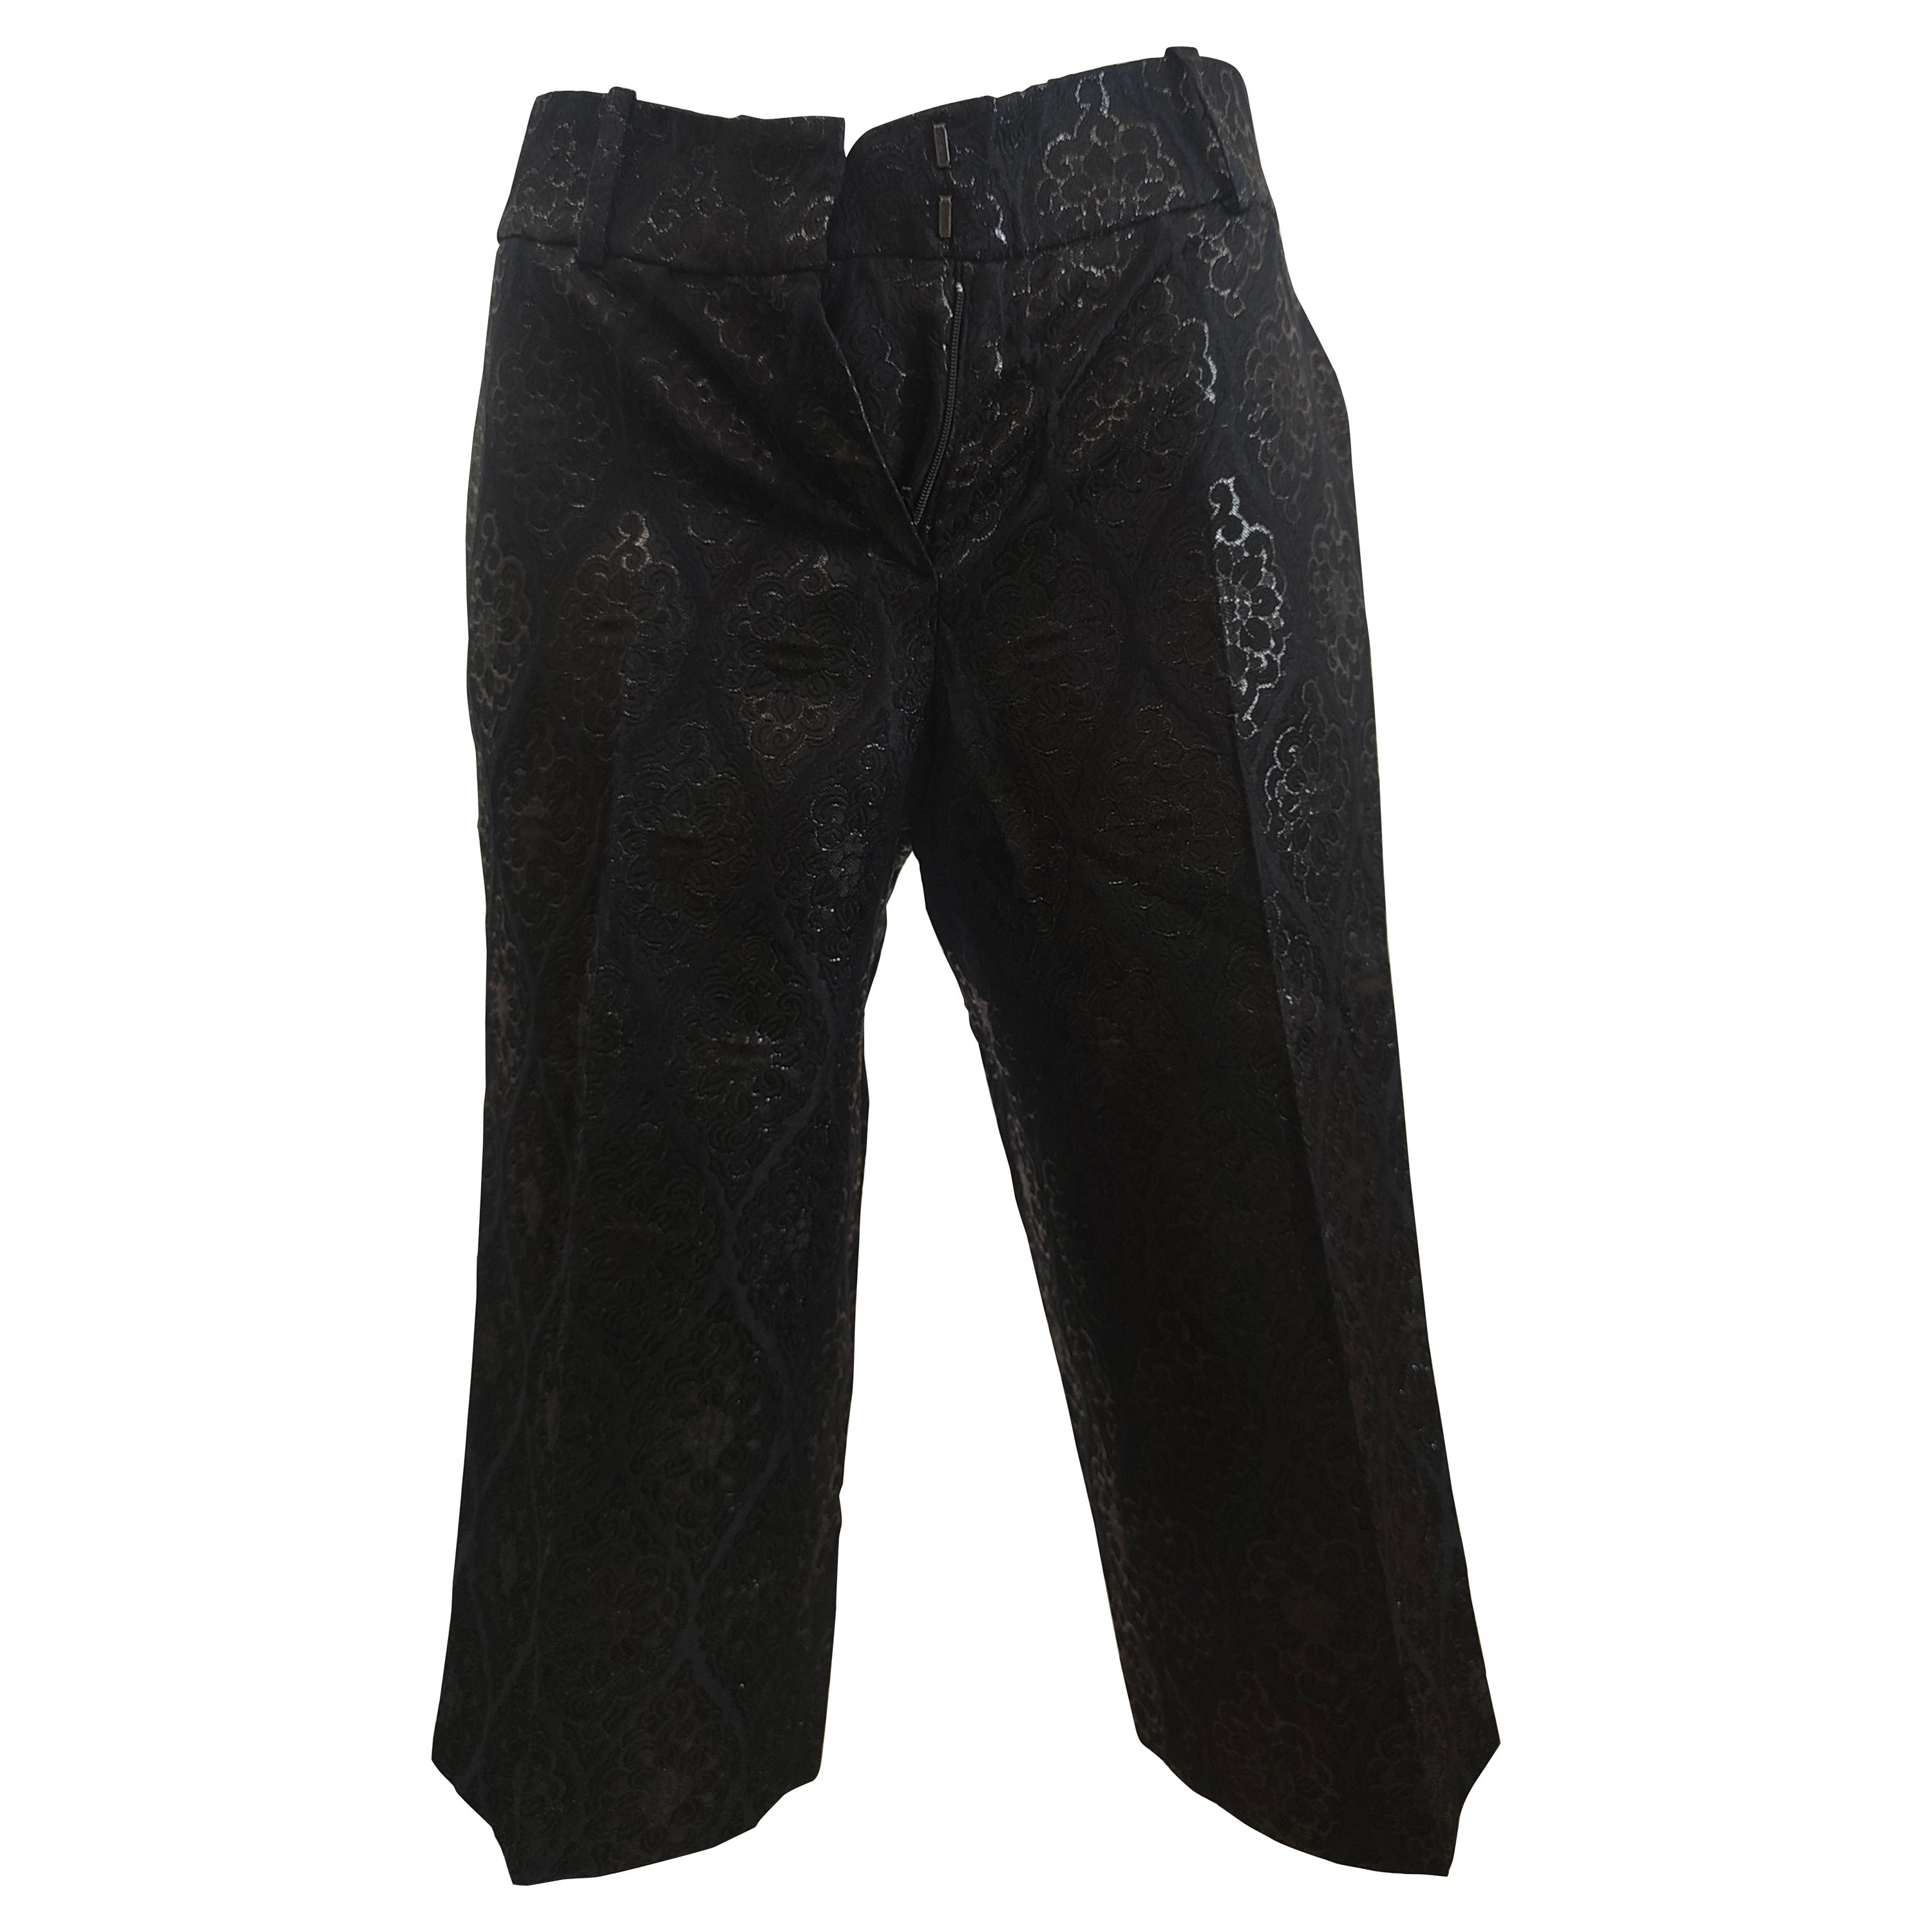 Michael Kors black pants NWOT For Sale